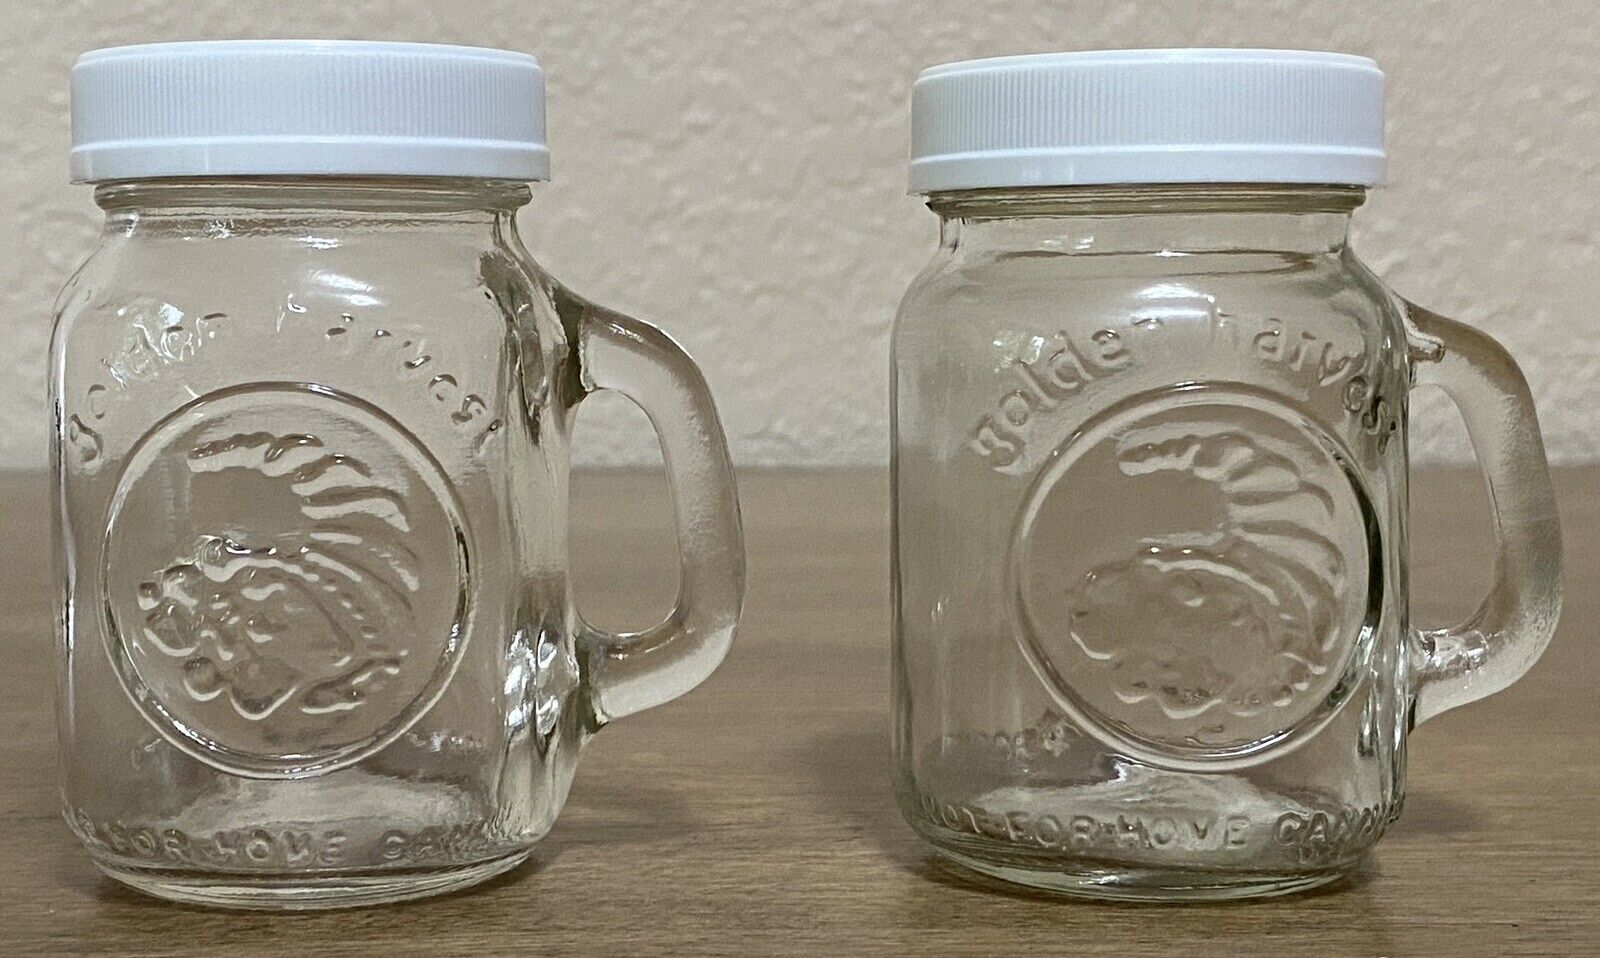 Used Set of 2 Golden Harvest Mason Glass Jar Salt and Pepper Shakers White Lids